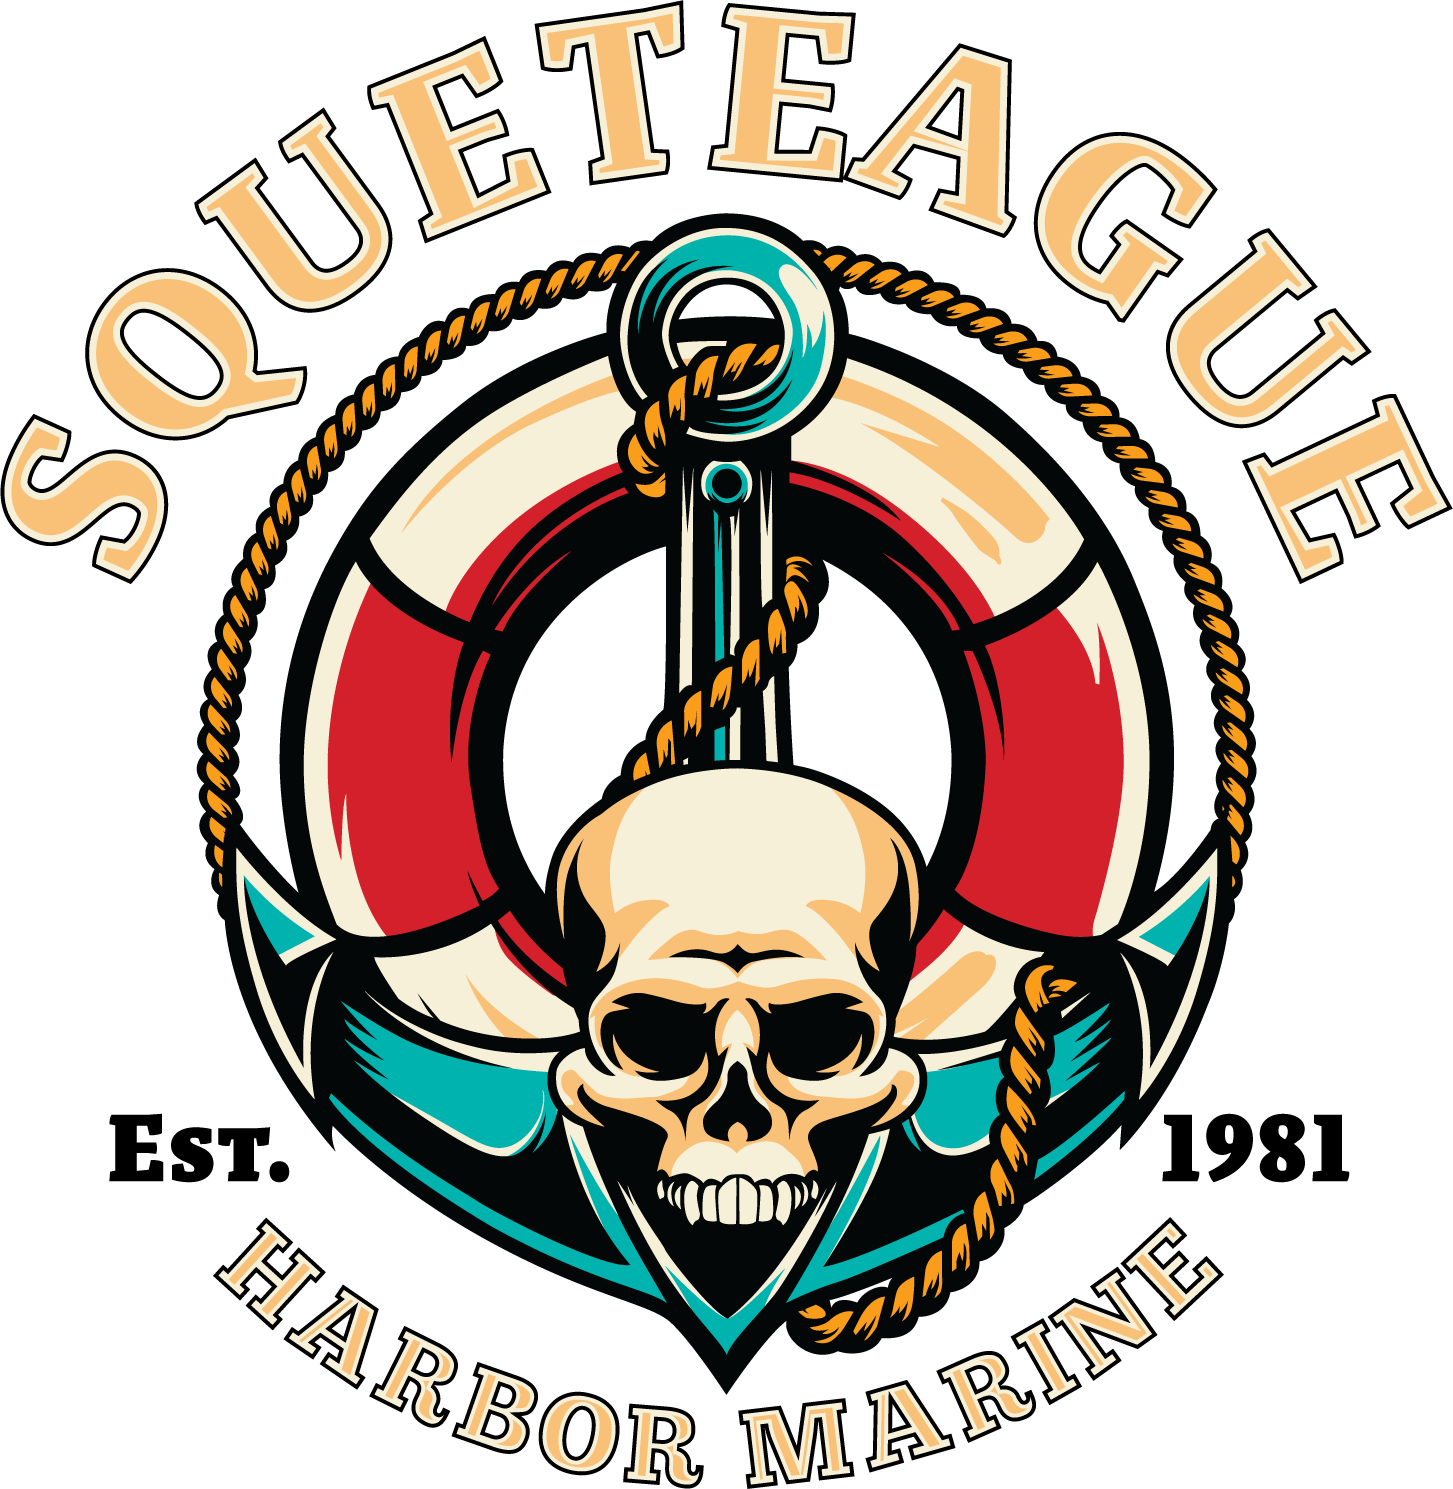 Squeteague Harbor Marine Logo